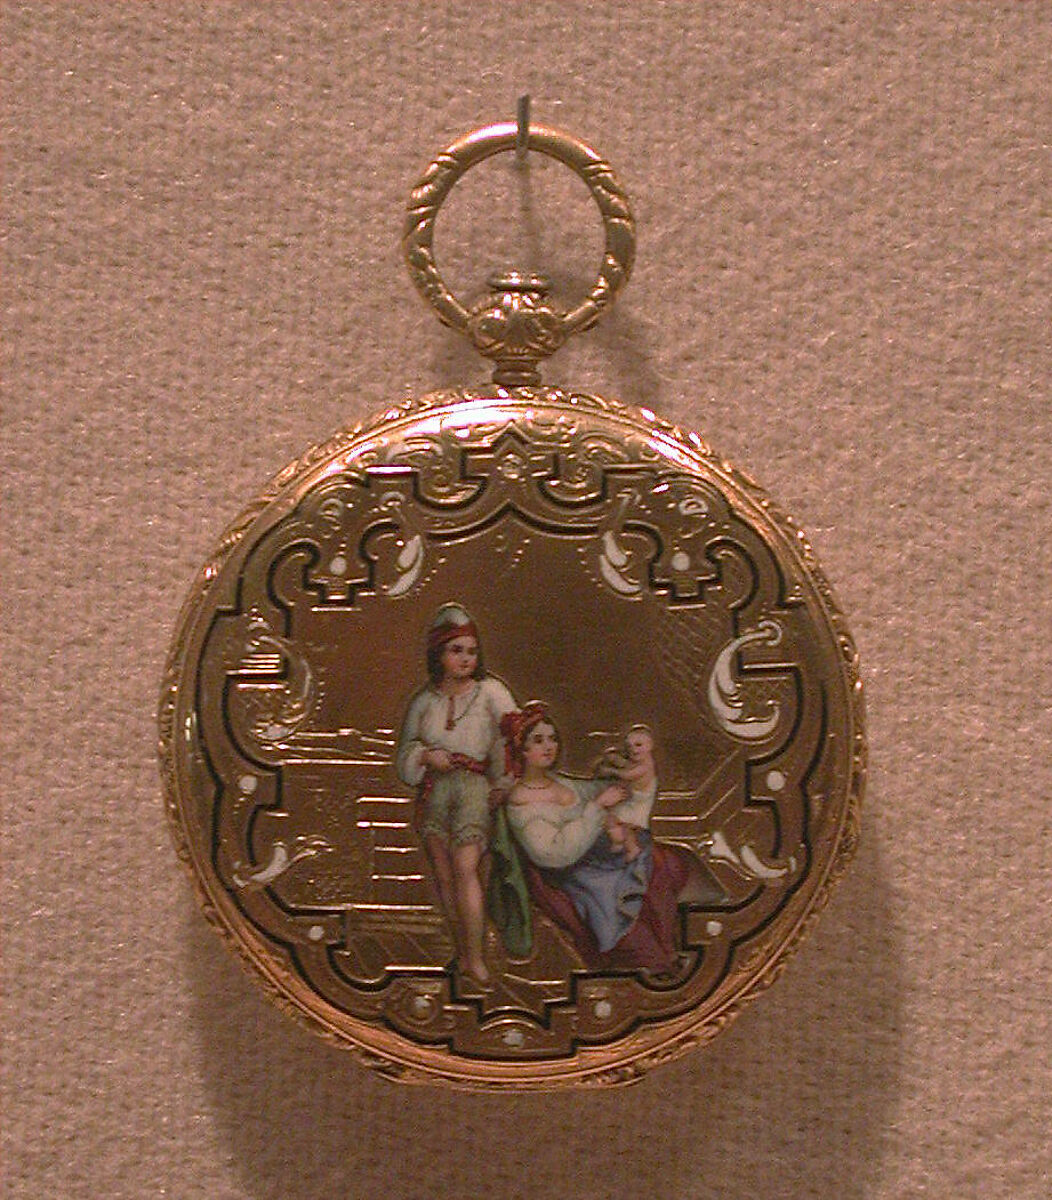 Watch, Watchmaker: Du Bois (Swiss), Case of gold and enamel; jeweled movement, with cylinder escapement, Swiss, La Chaux-de-Fonds 